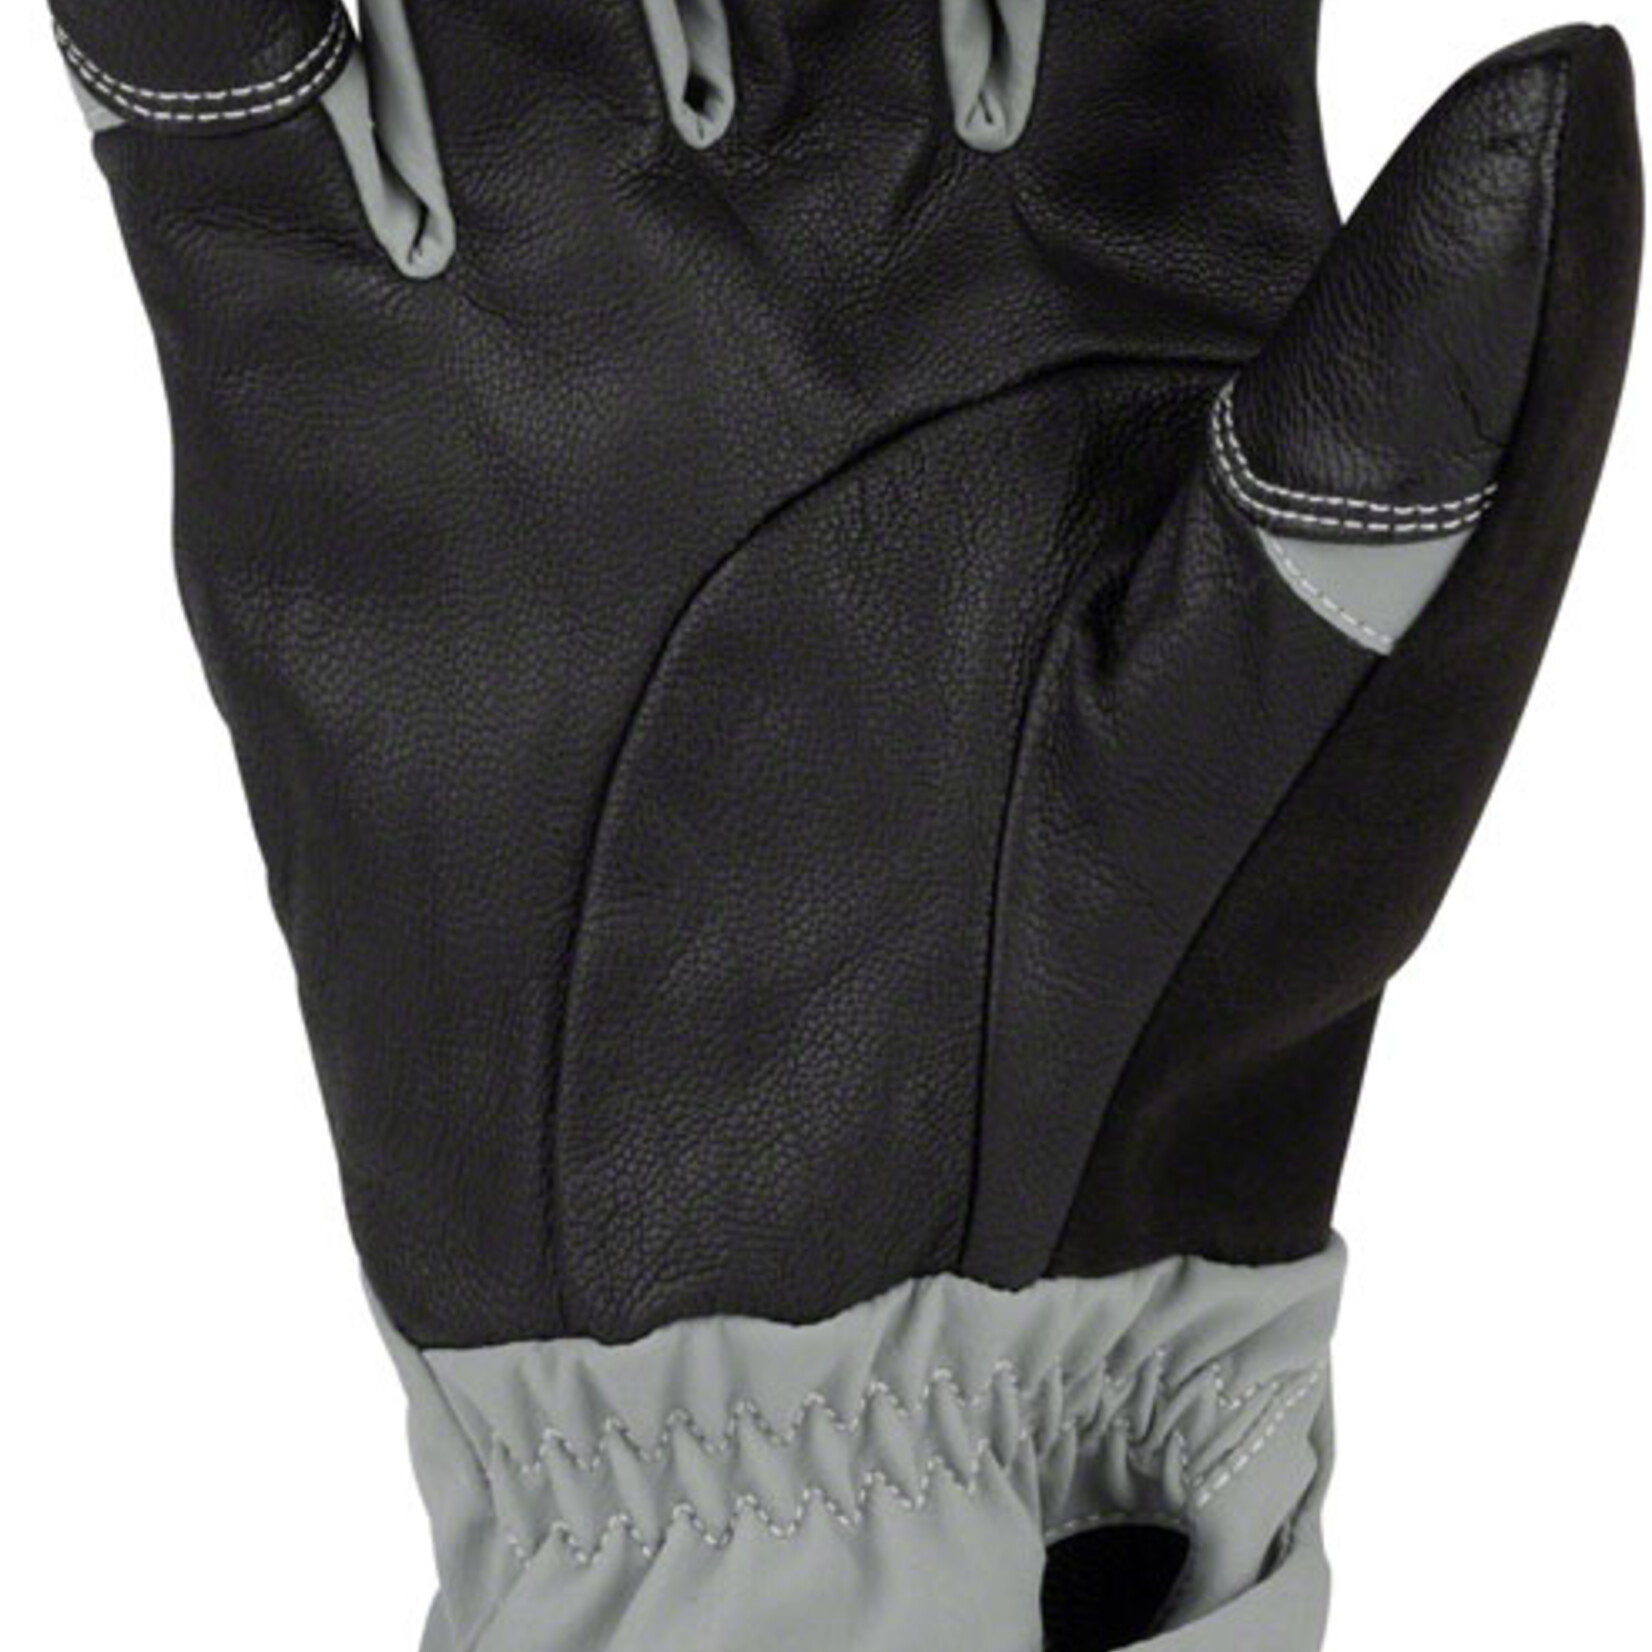 45NRTH 45NRTH Sturmfist 5 Glove, 23/34